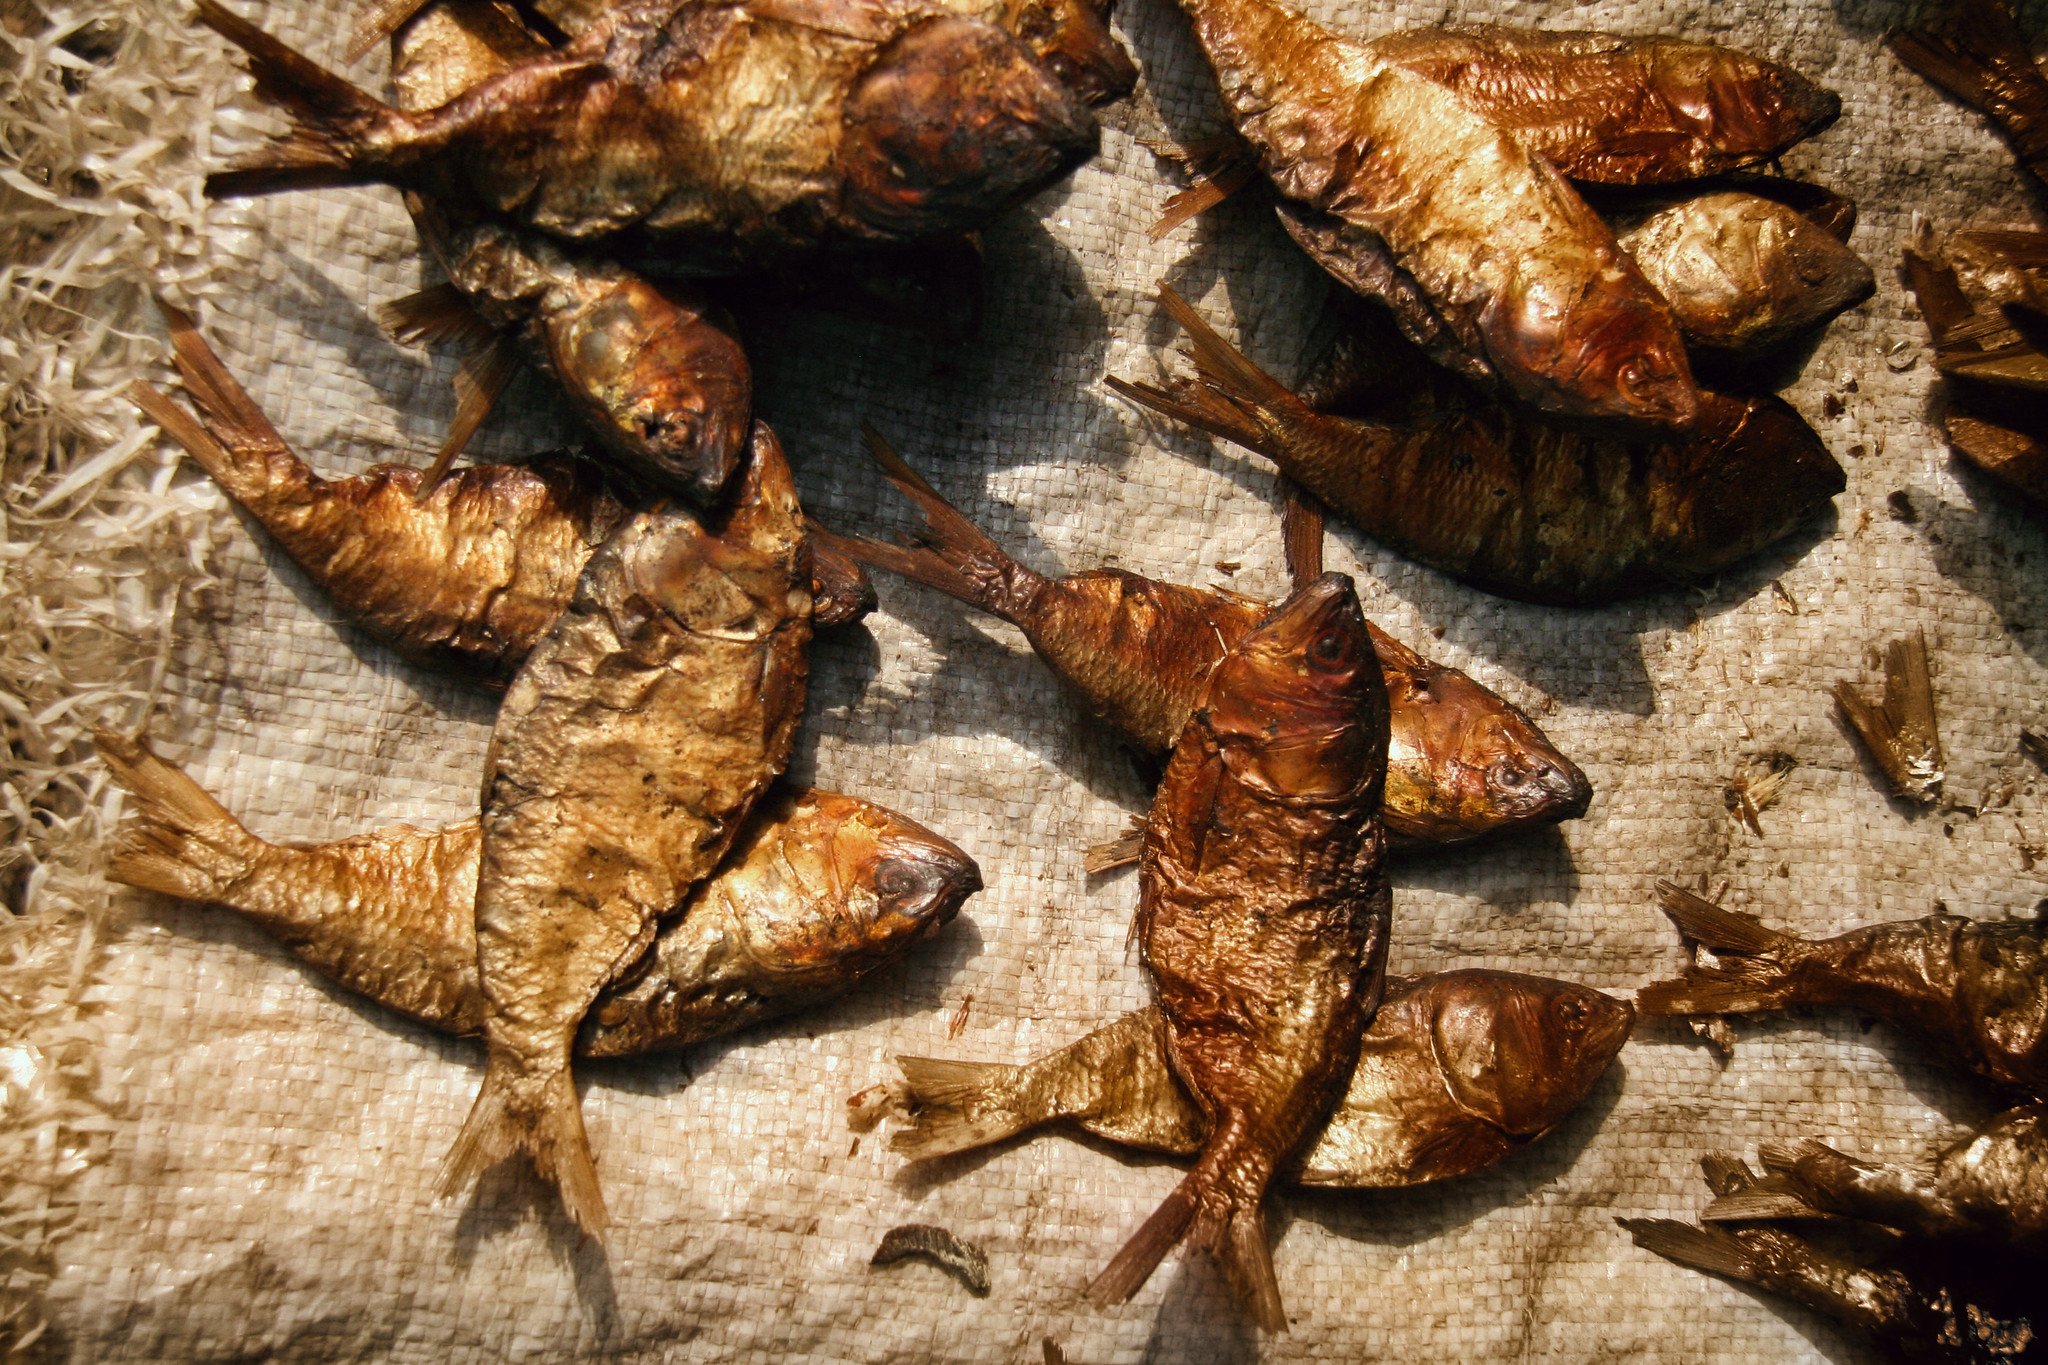 dried fish